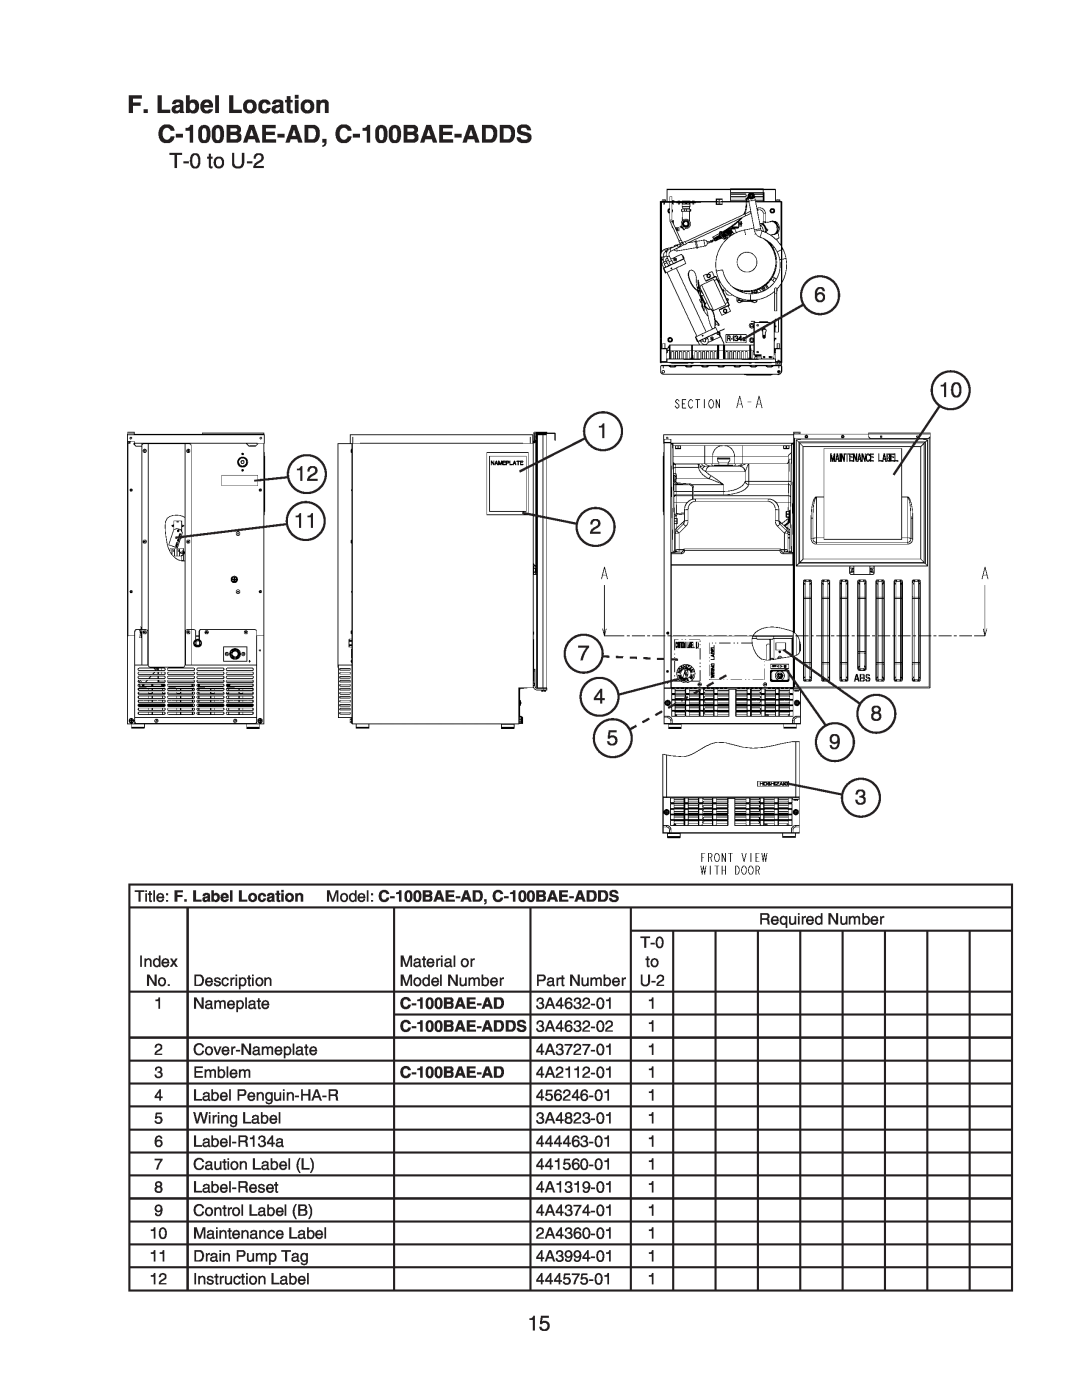 Hoshizaki manual F. Label Location C-100BAE-AD, C-100BAE-ADDS, Title F. Label Location Model C-100BAE-AD, C-100BAE-ADDS 